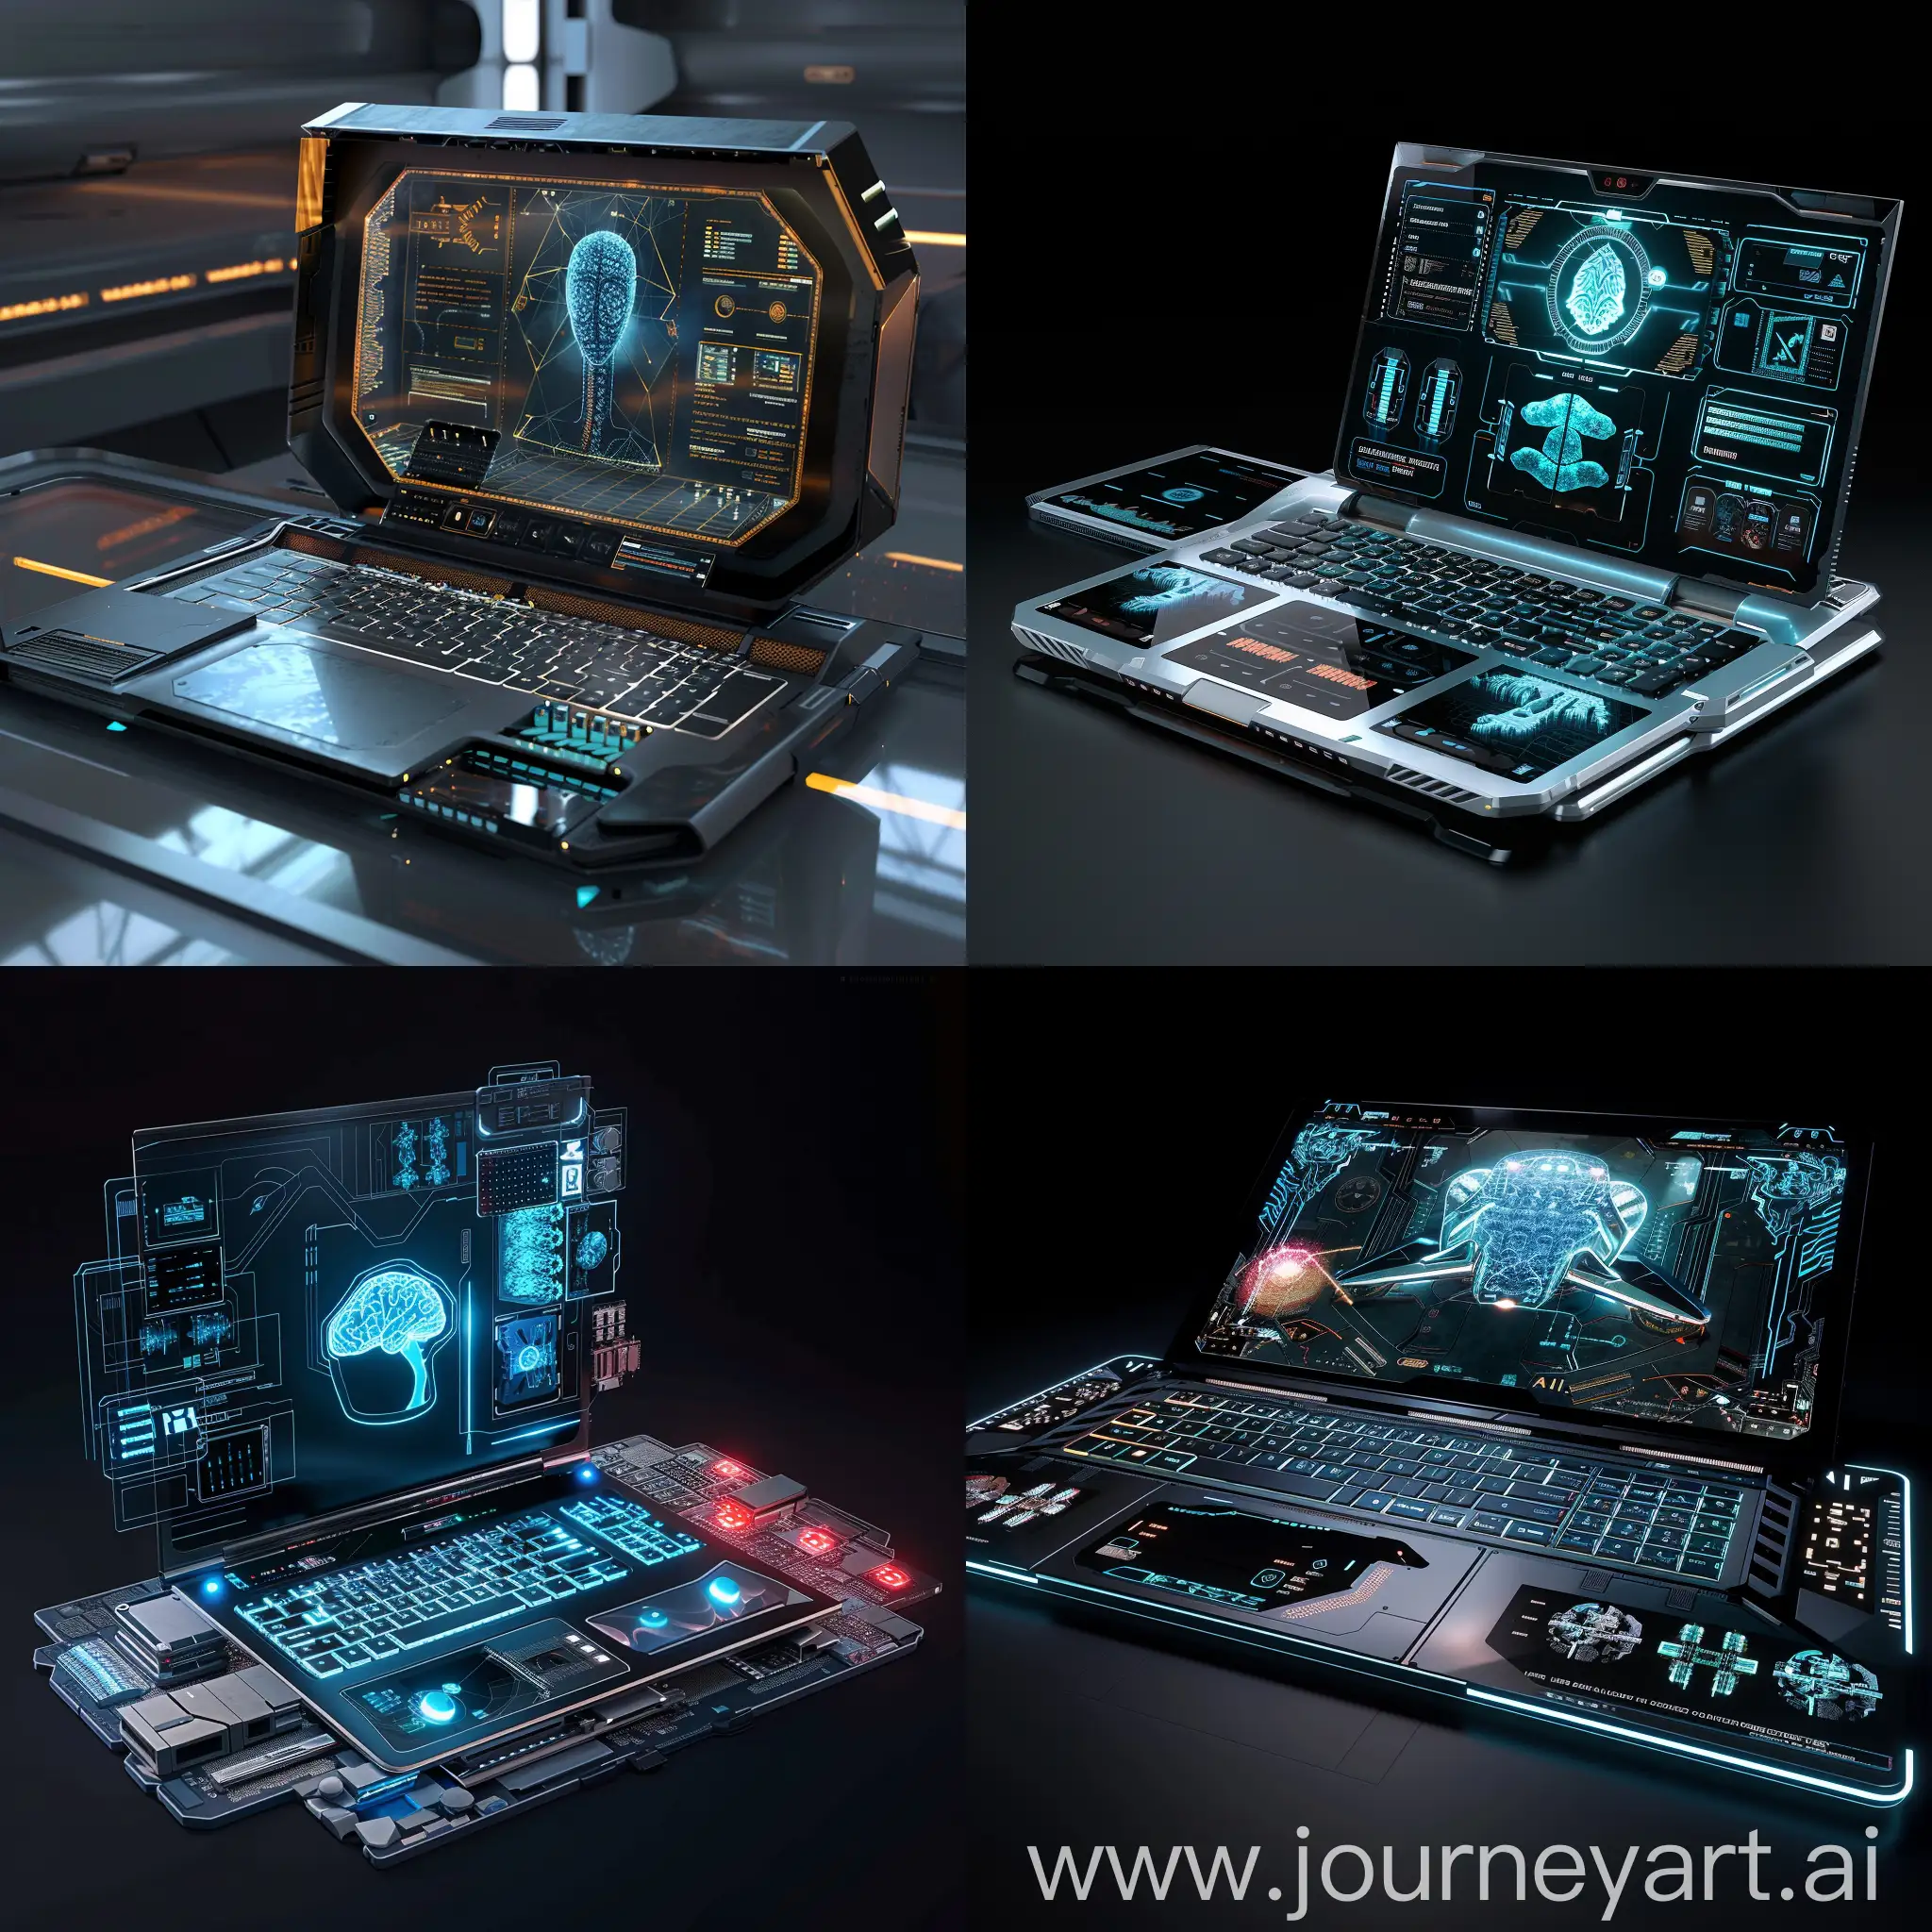 Futuristic-Modular-Laptop-with-SelfRepairing-Nanobots-and-Holographic-Displays